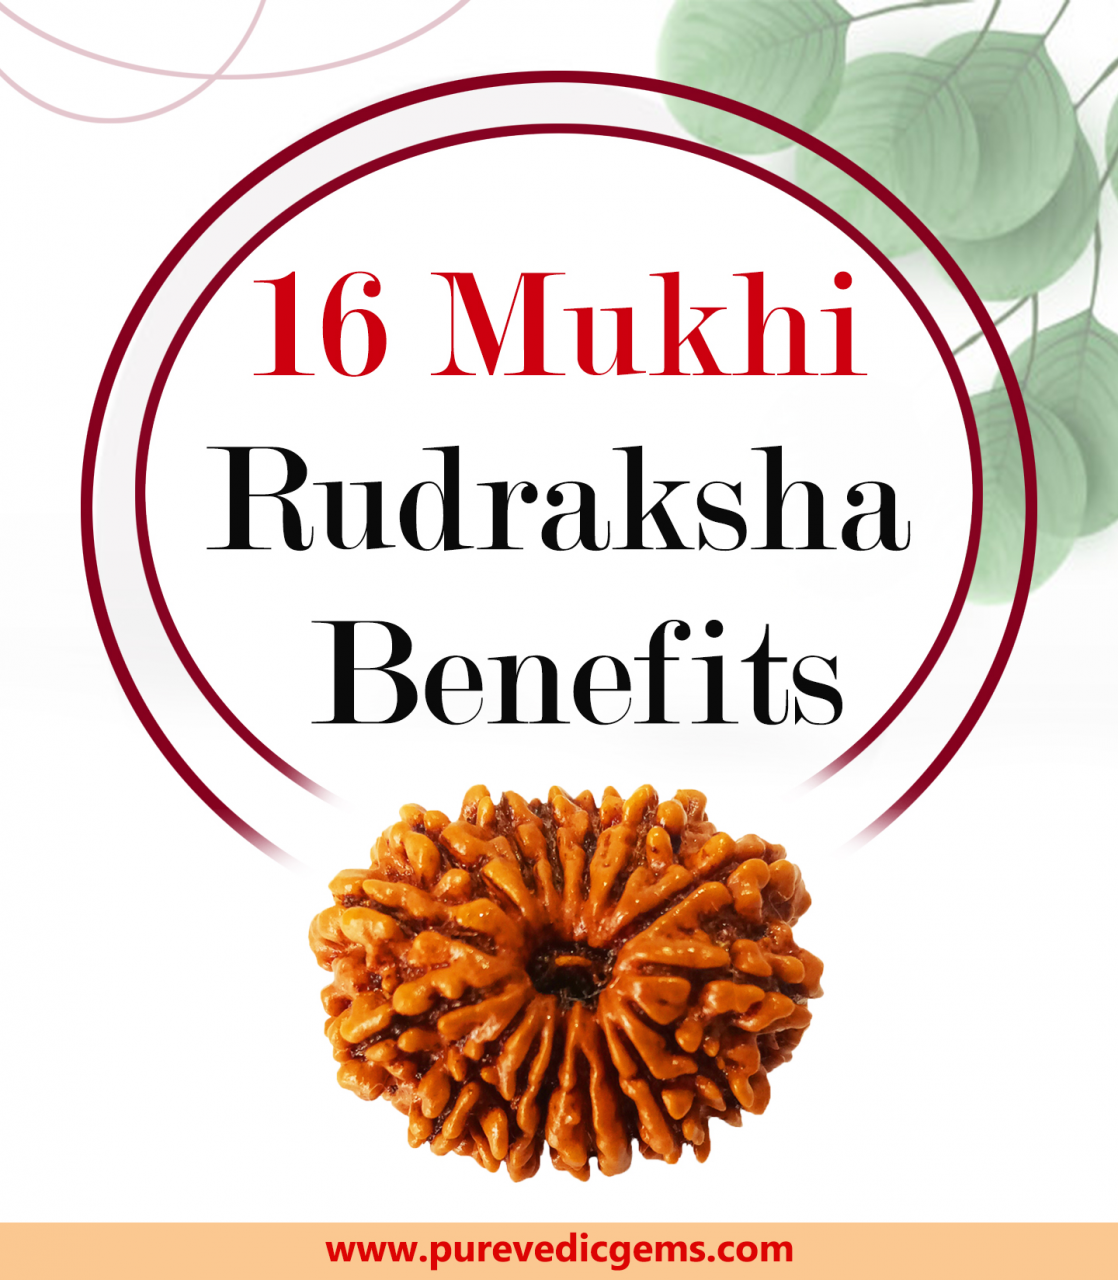 16-mukhi-rudraksha-benefits_large